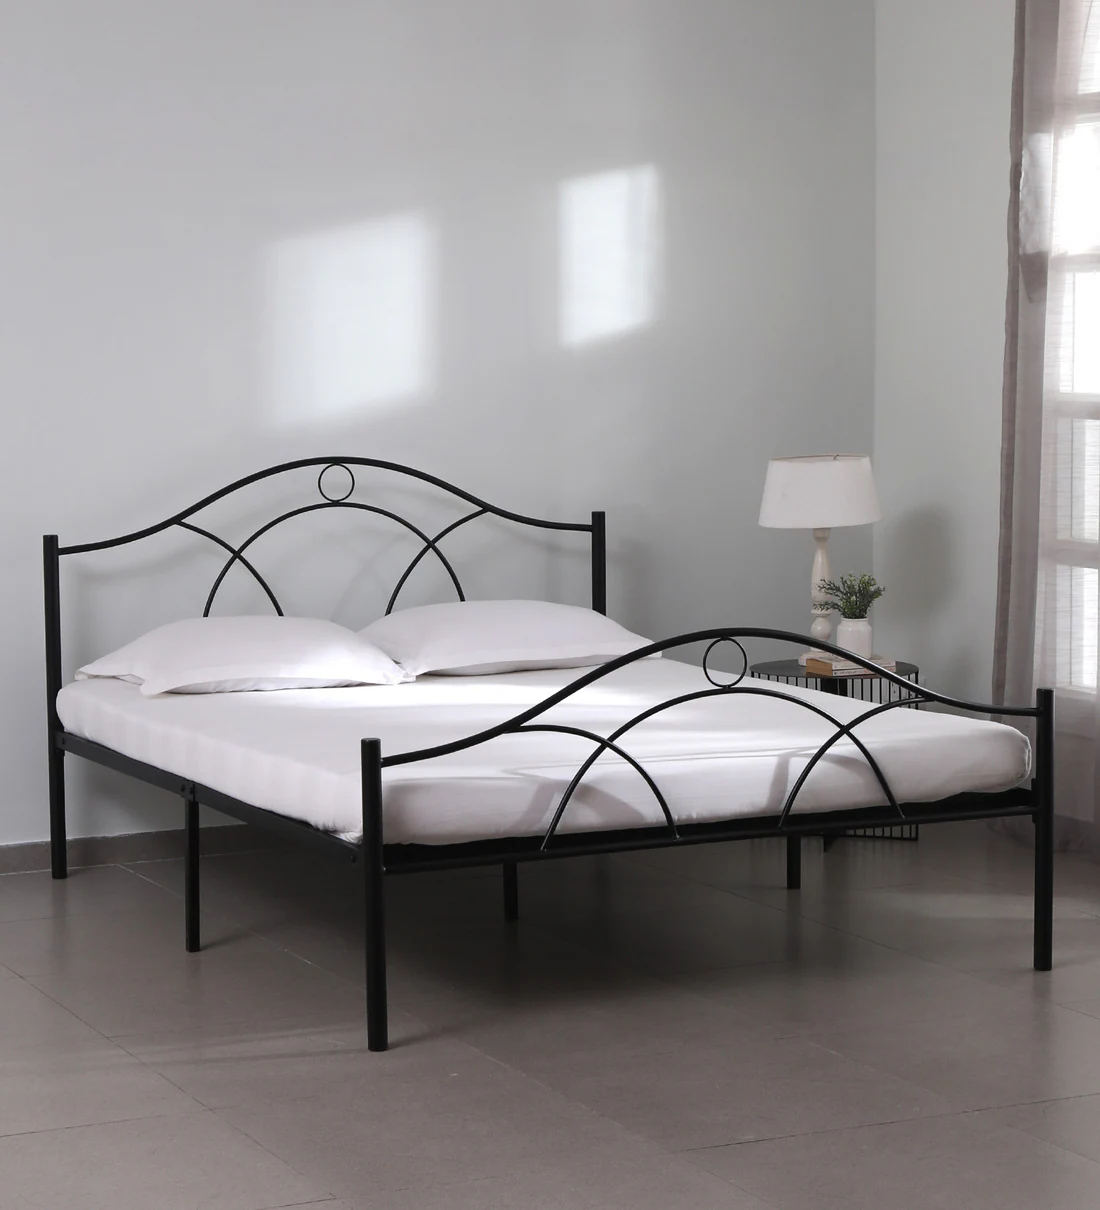 MM Furniture - Latest update - Metal Bed Queen Size Manufacturer In Karnataka